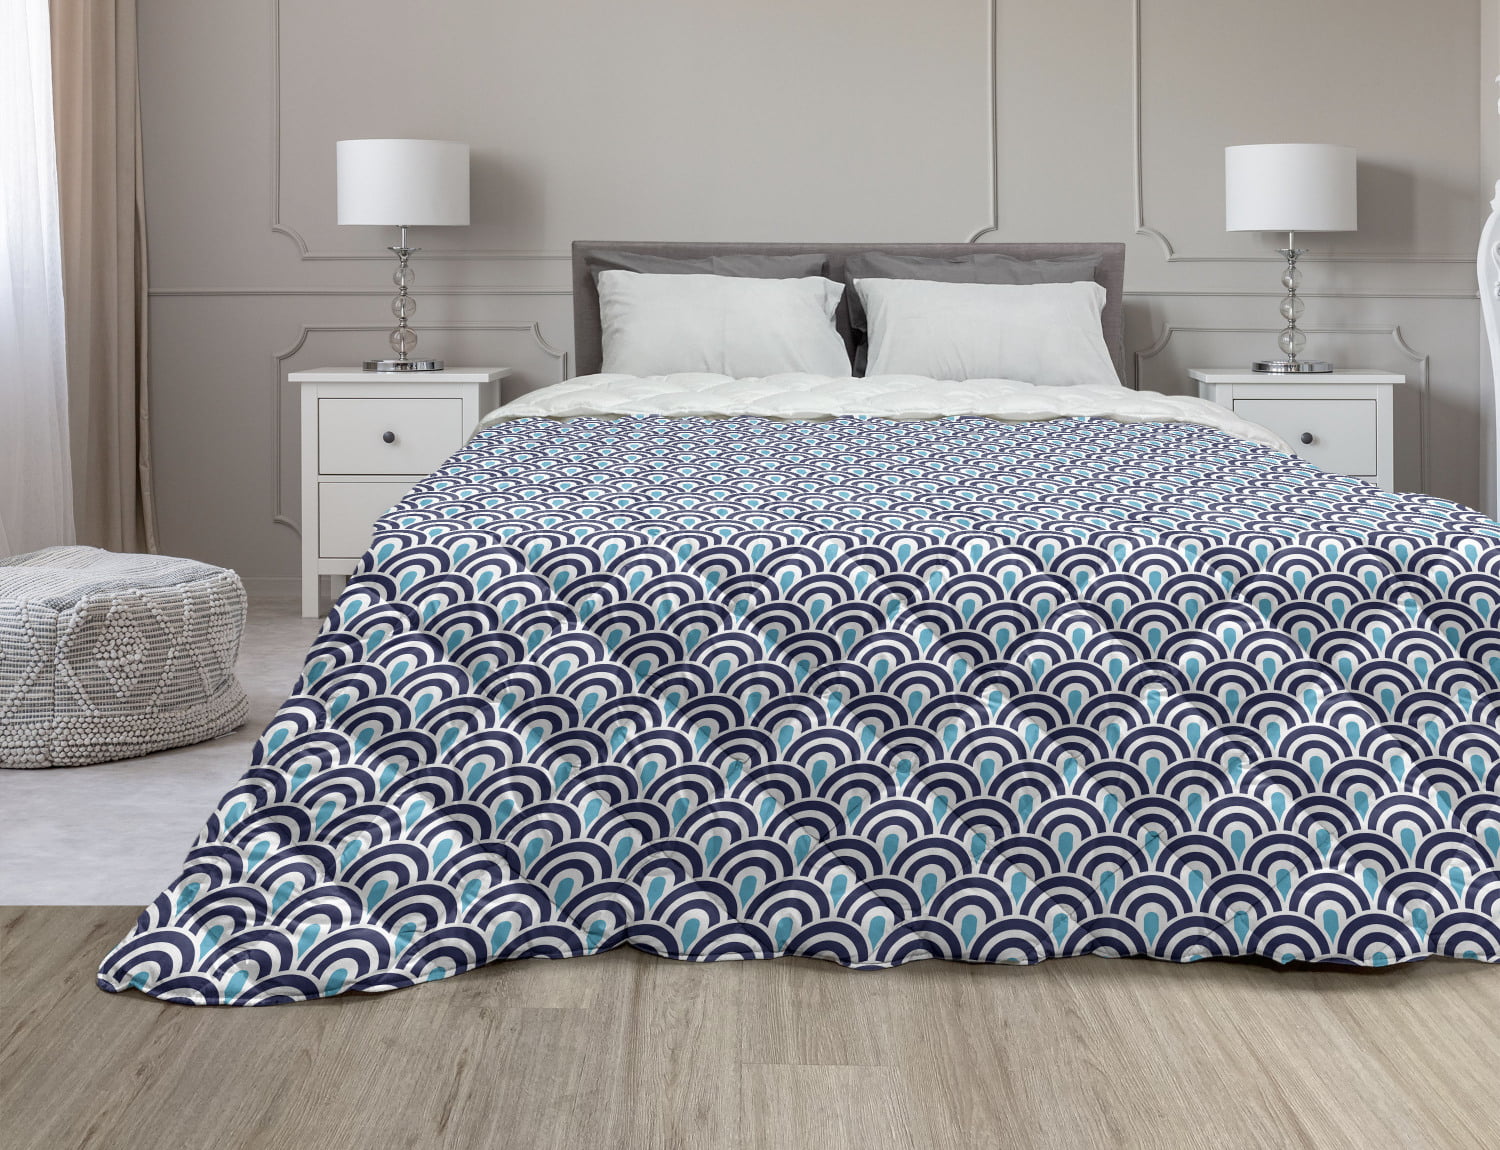 Details about   Fish Scale Pillow Sham Decorative Pillowcase 3 Sizes Bedroom Decor Ambesonne 